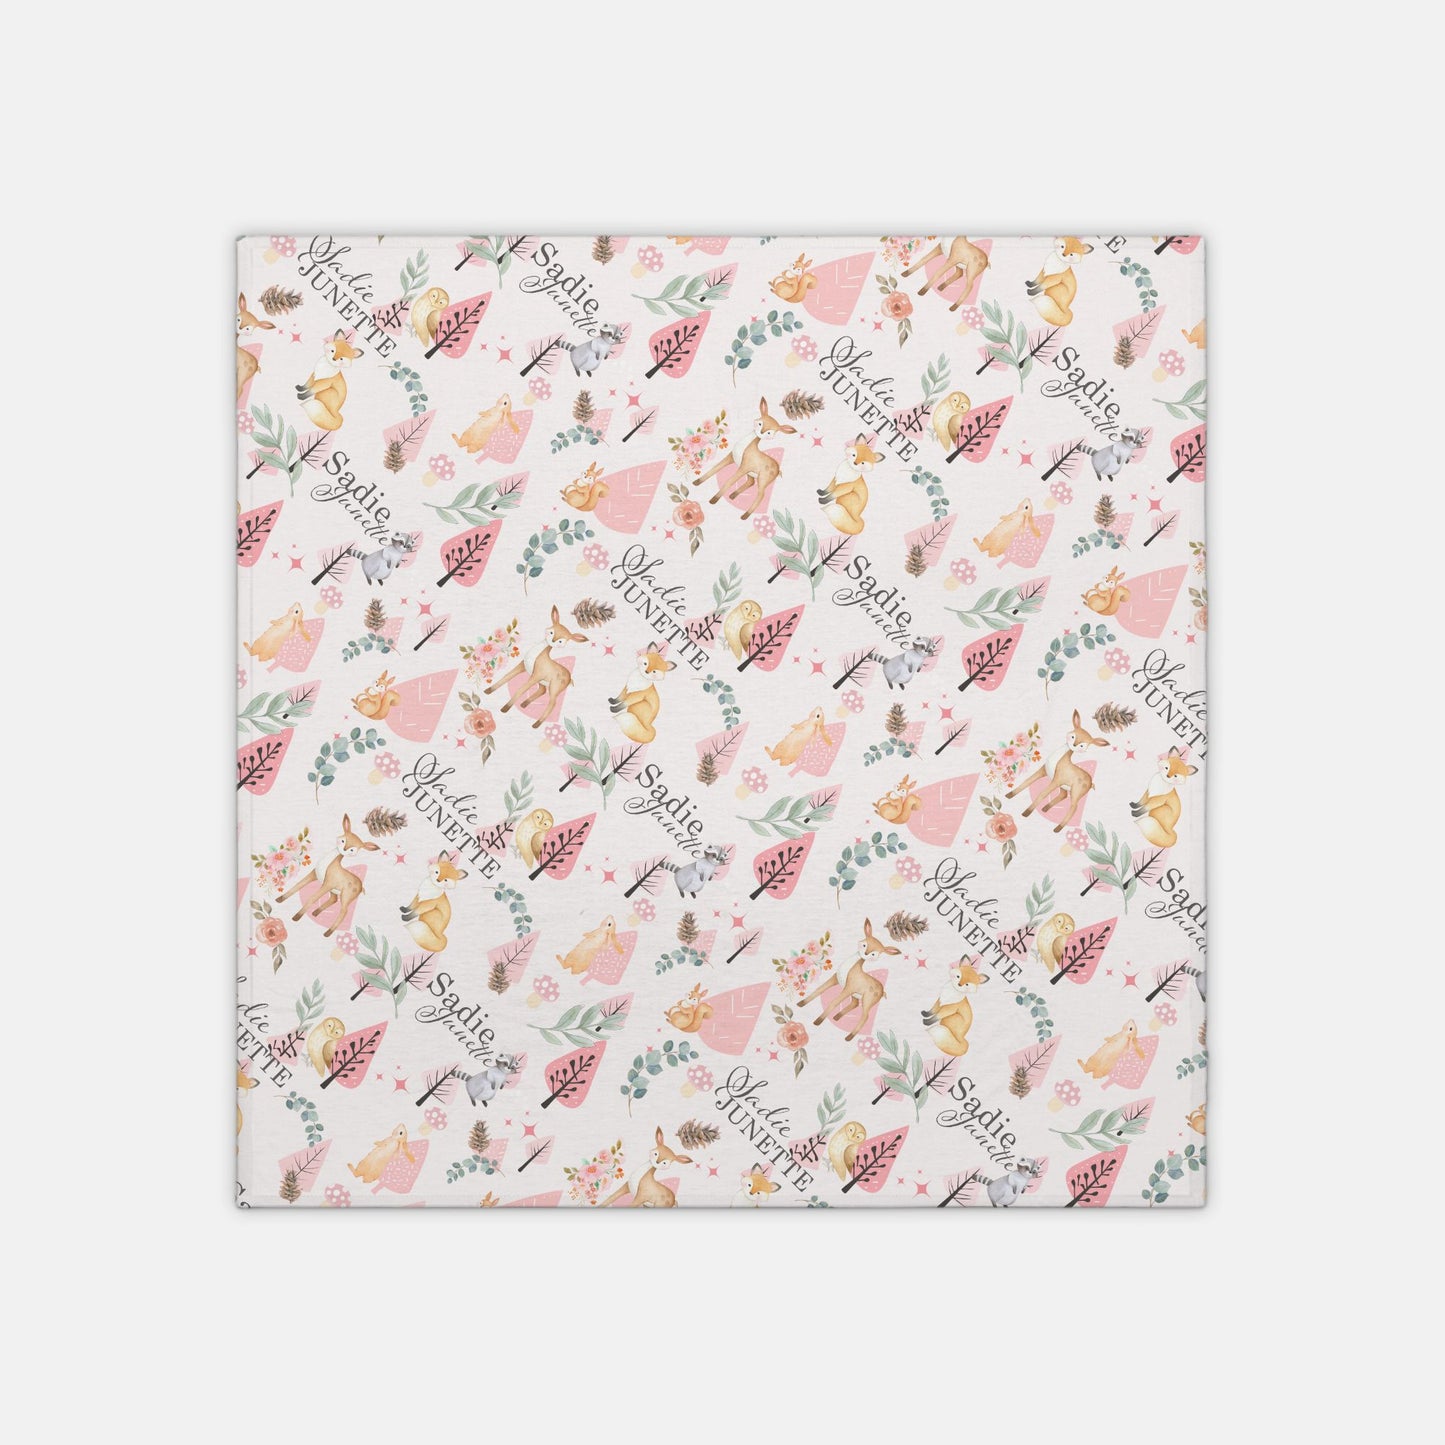 Swaddle Blanket with Customized Name - Pink Woodland Animals - 42" x 42"